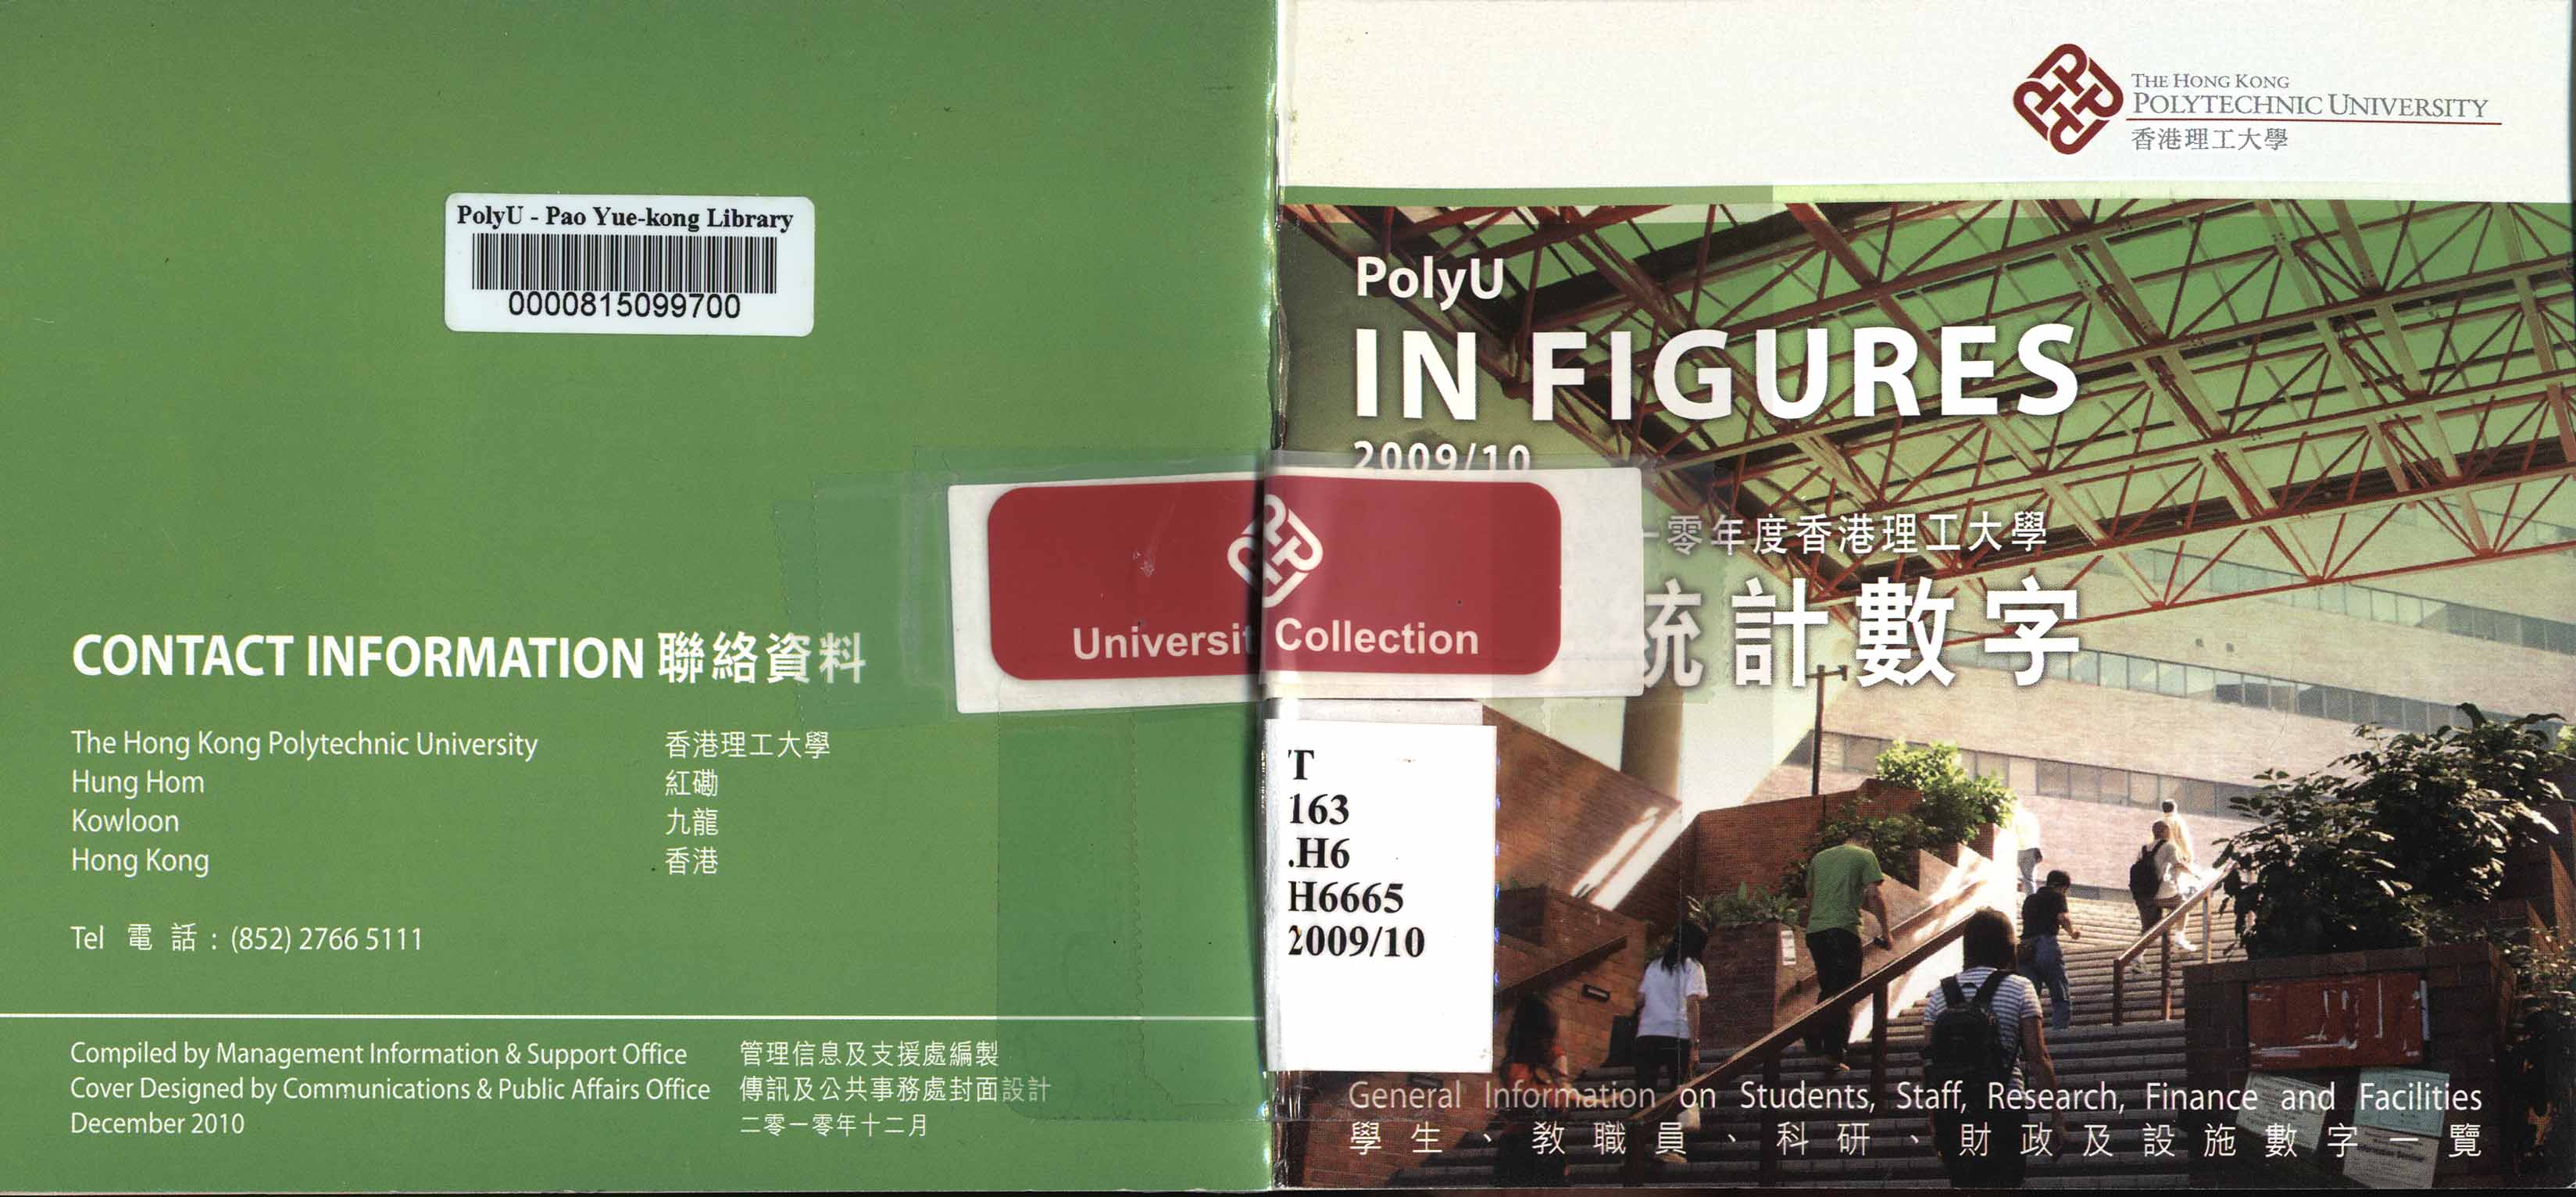 The Hong Kong Polytechnic University in figures 2009/10